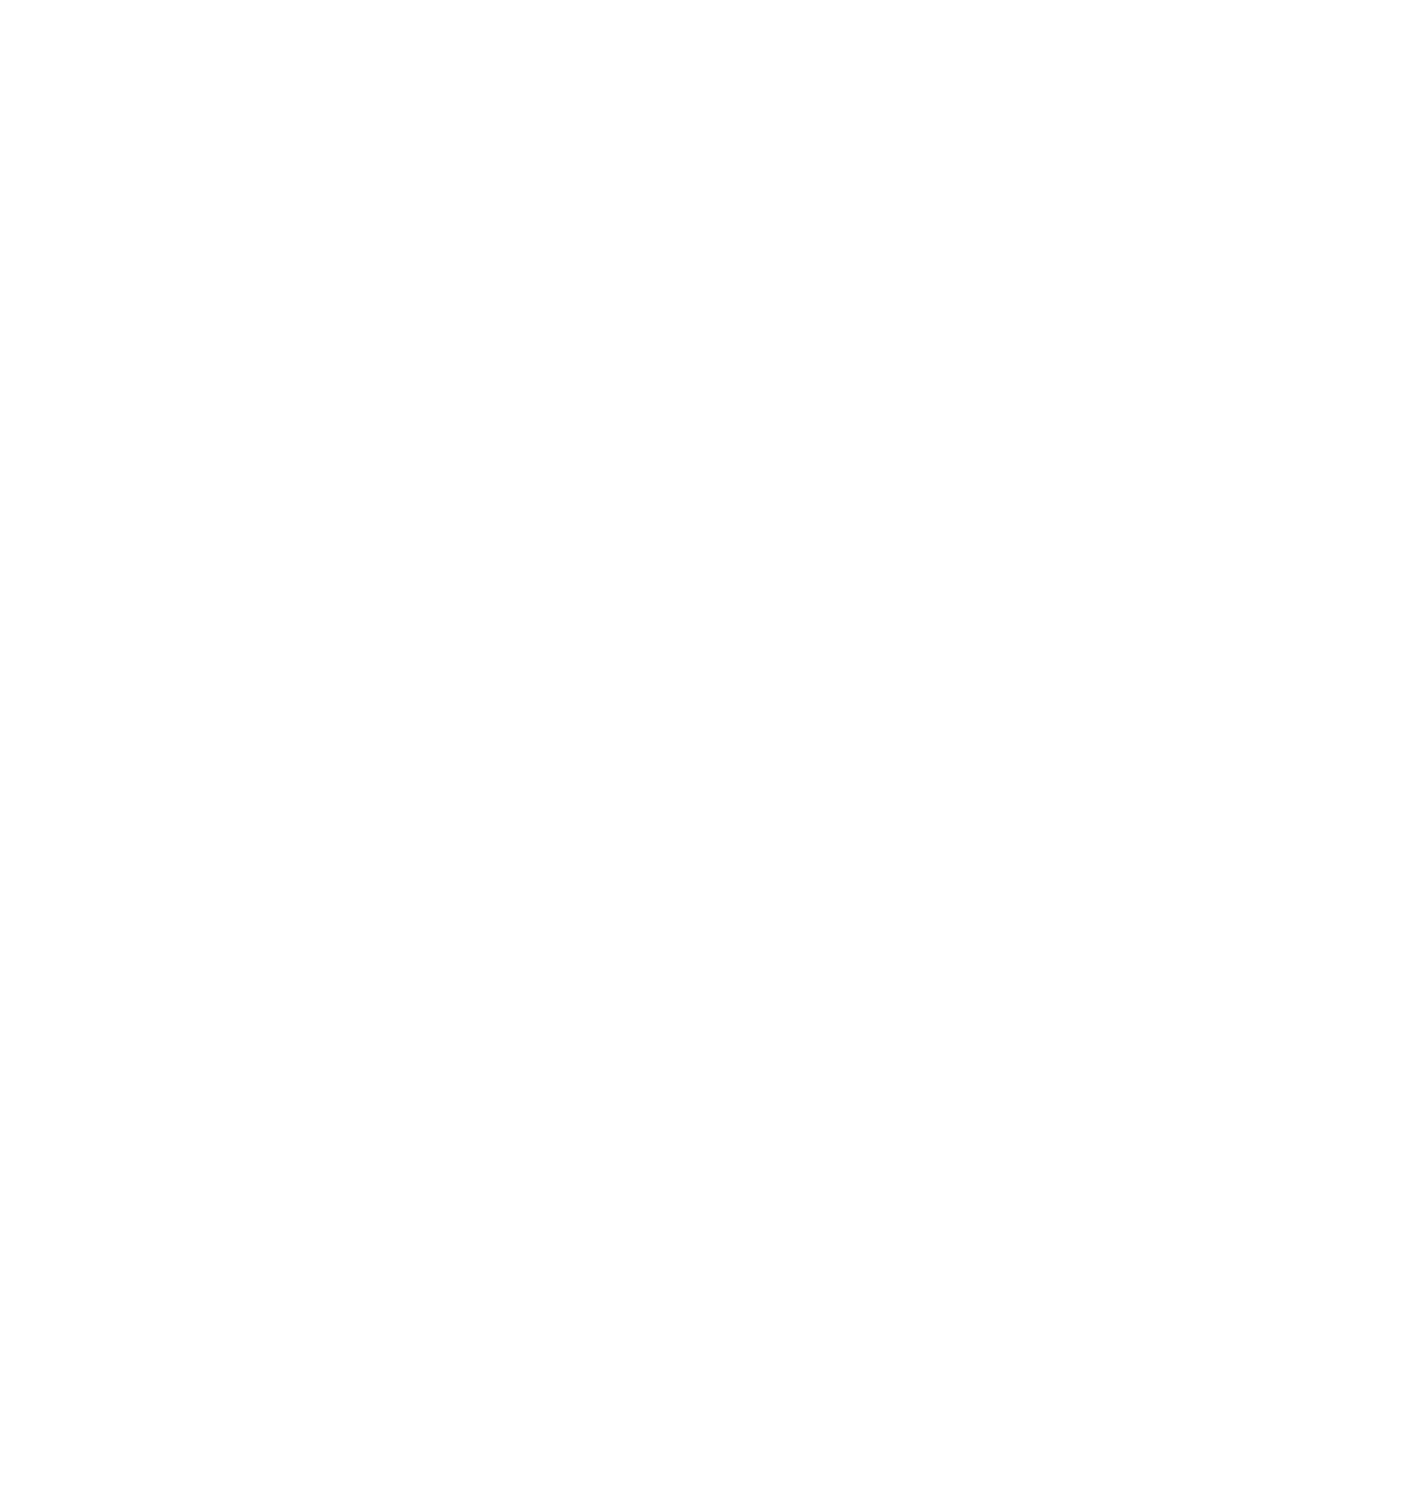 Hang Lung Properties logo for dark backgrounds (transparent PNG)